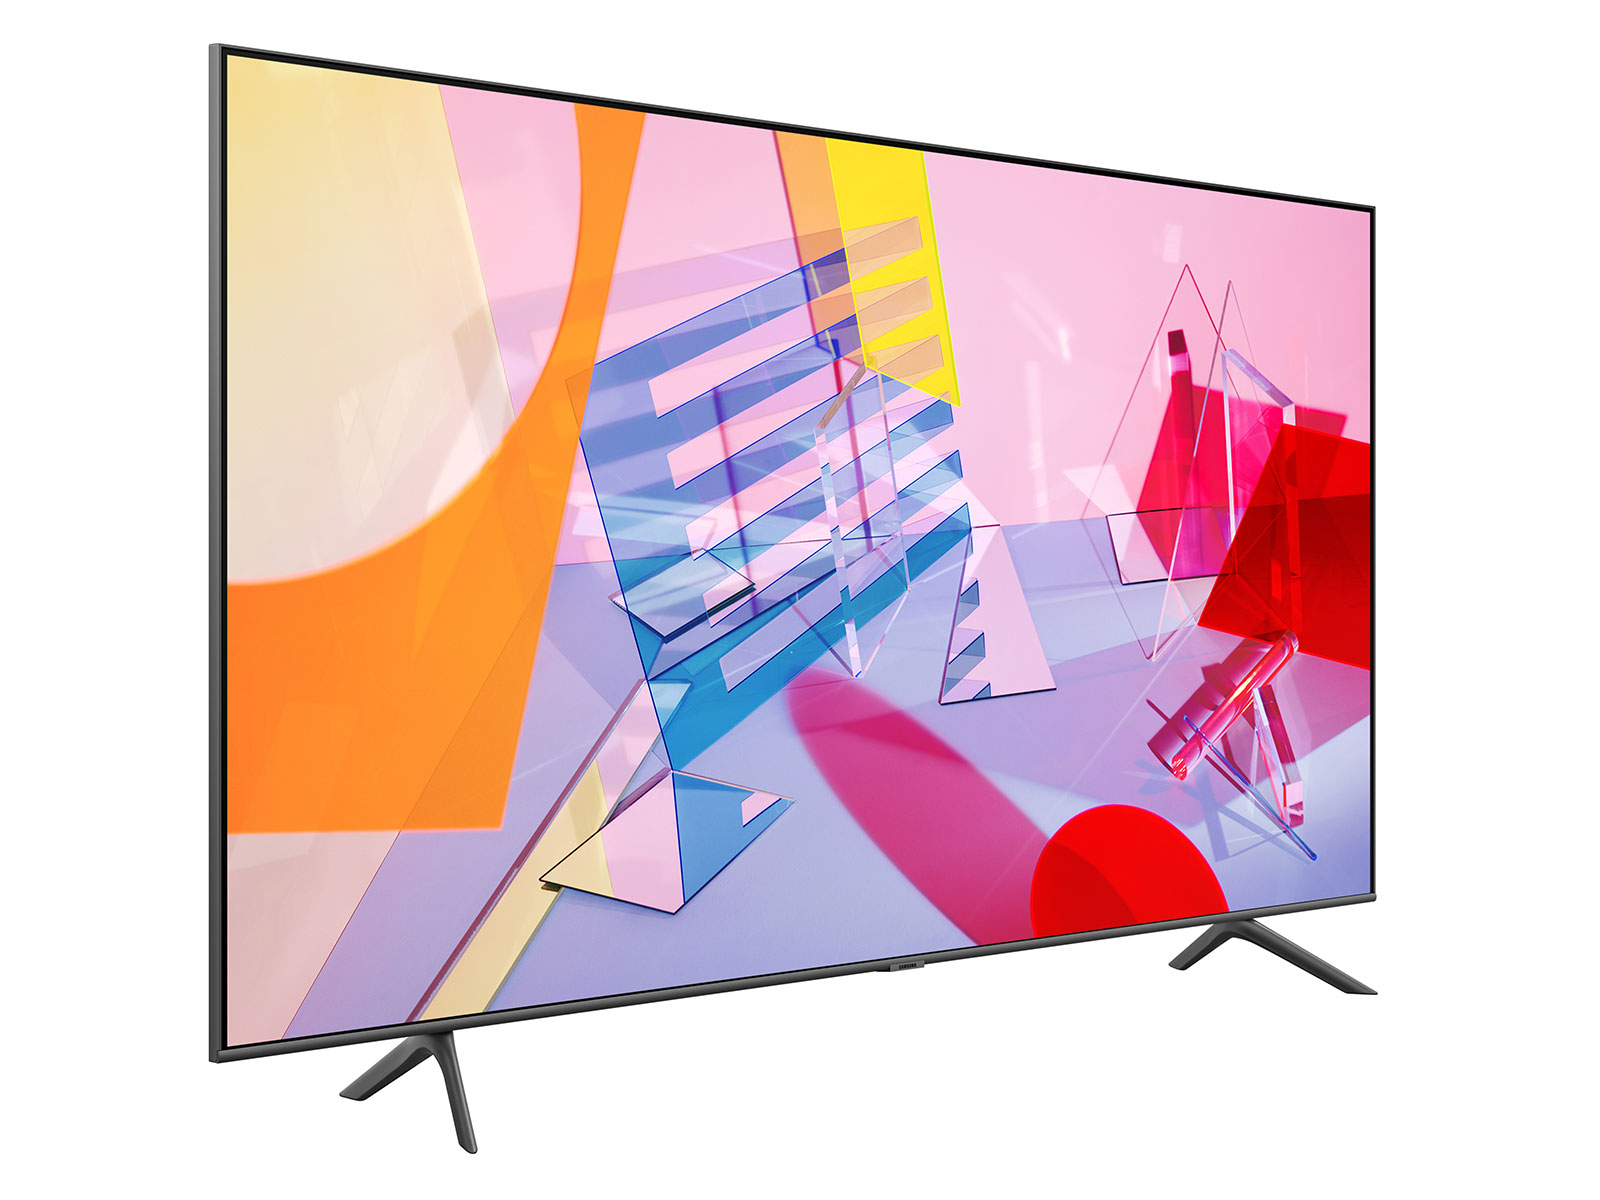 Thumbnail image of 55” Class Q6DT QLED 4K UHD HDR Smart TV (2020)